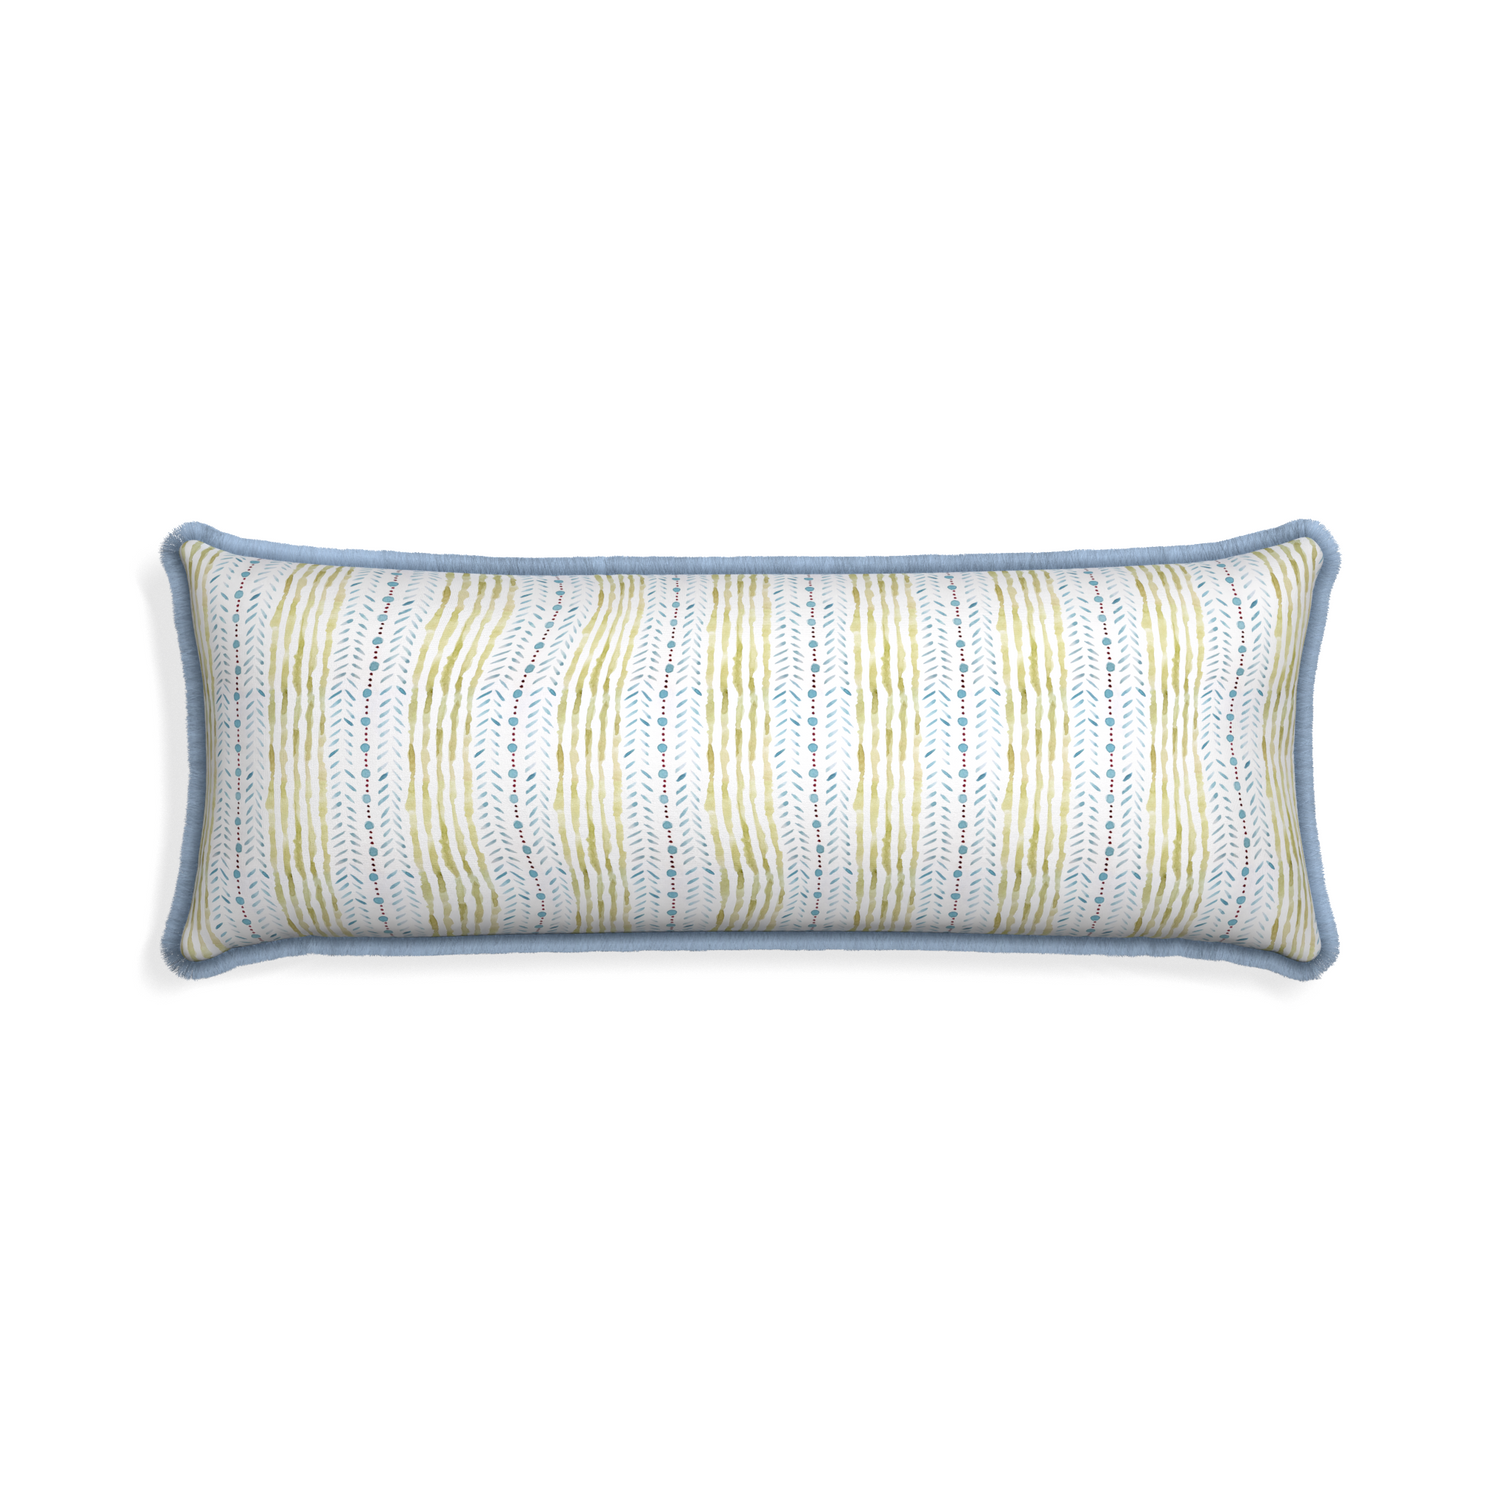 Xl-lumbar julia custom pillow with sky fringe on white background